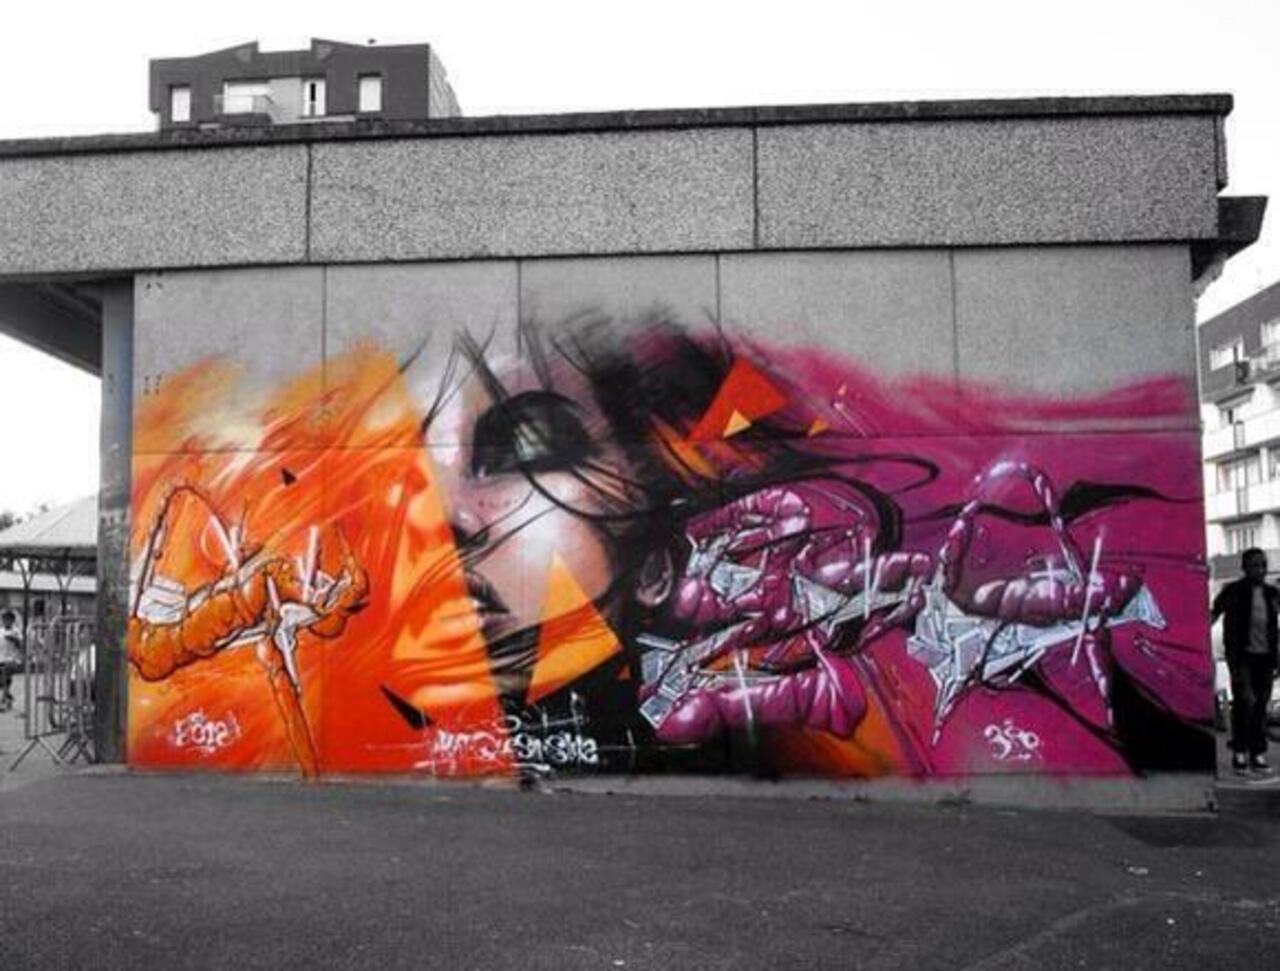 Colab of Sly2, Kat, Quesa Street Art wall in Paris, France #art #mural #graffiti #streetart https://t.co/y2QYWVPYfi